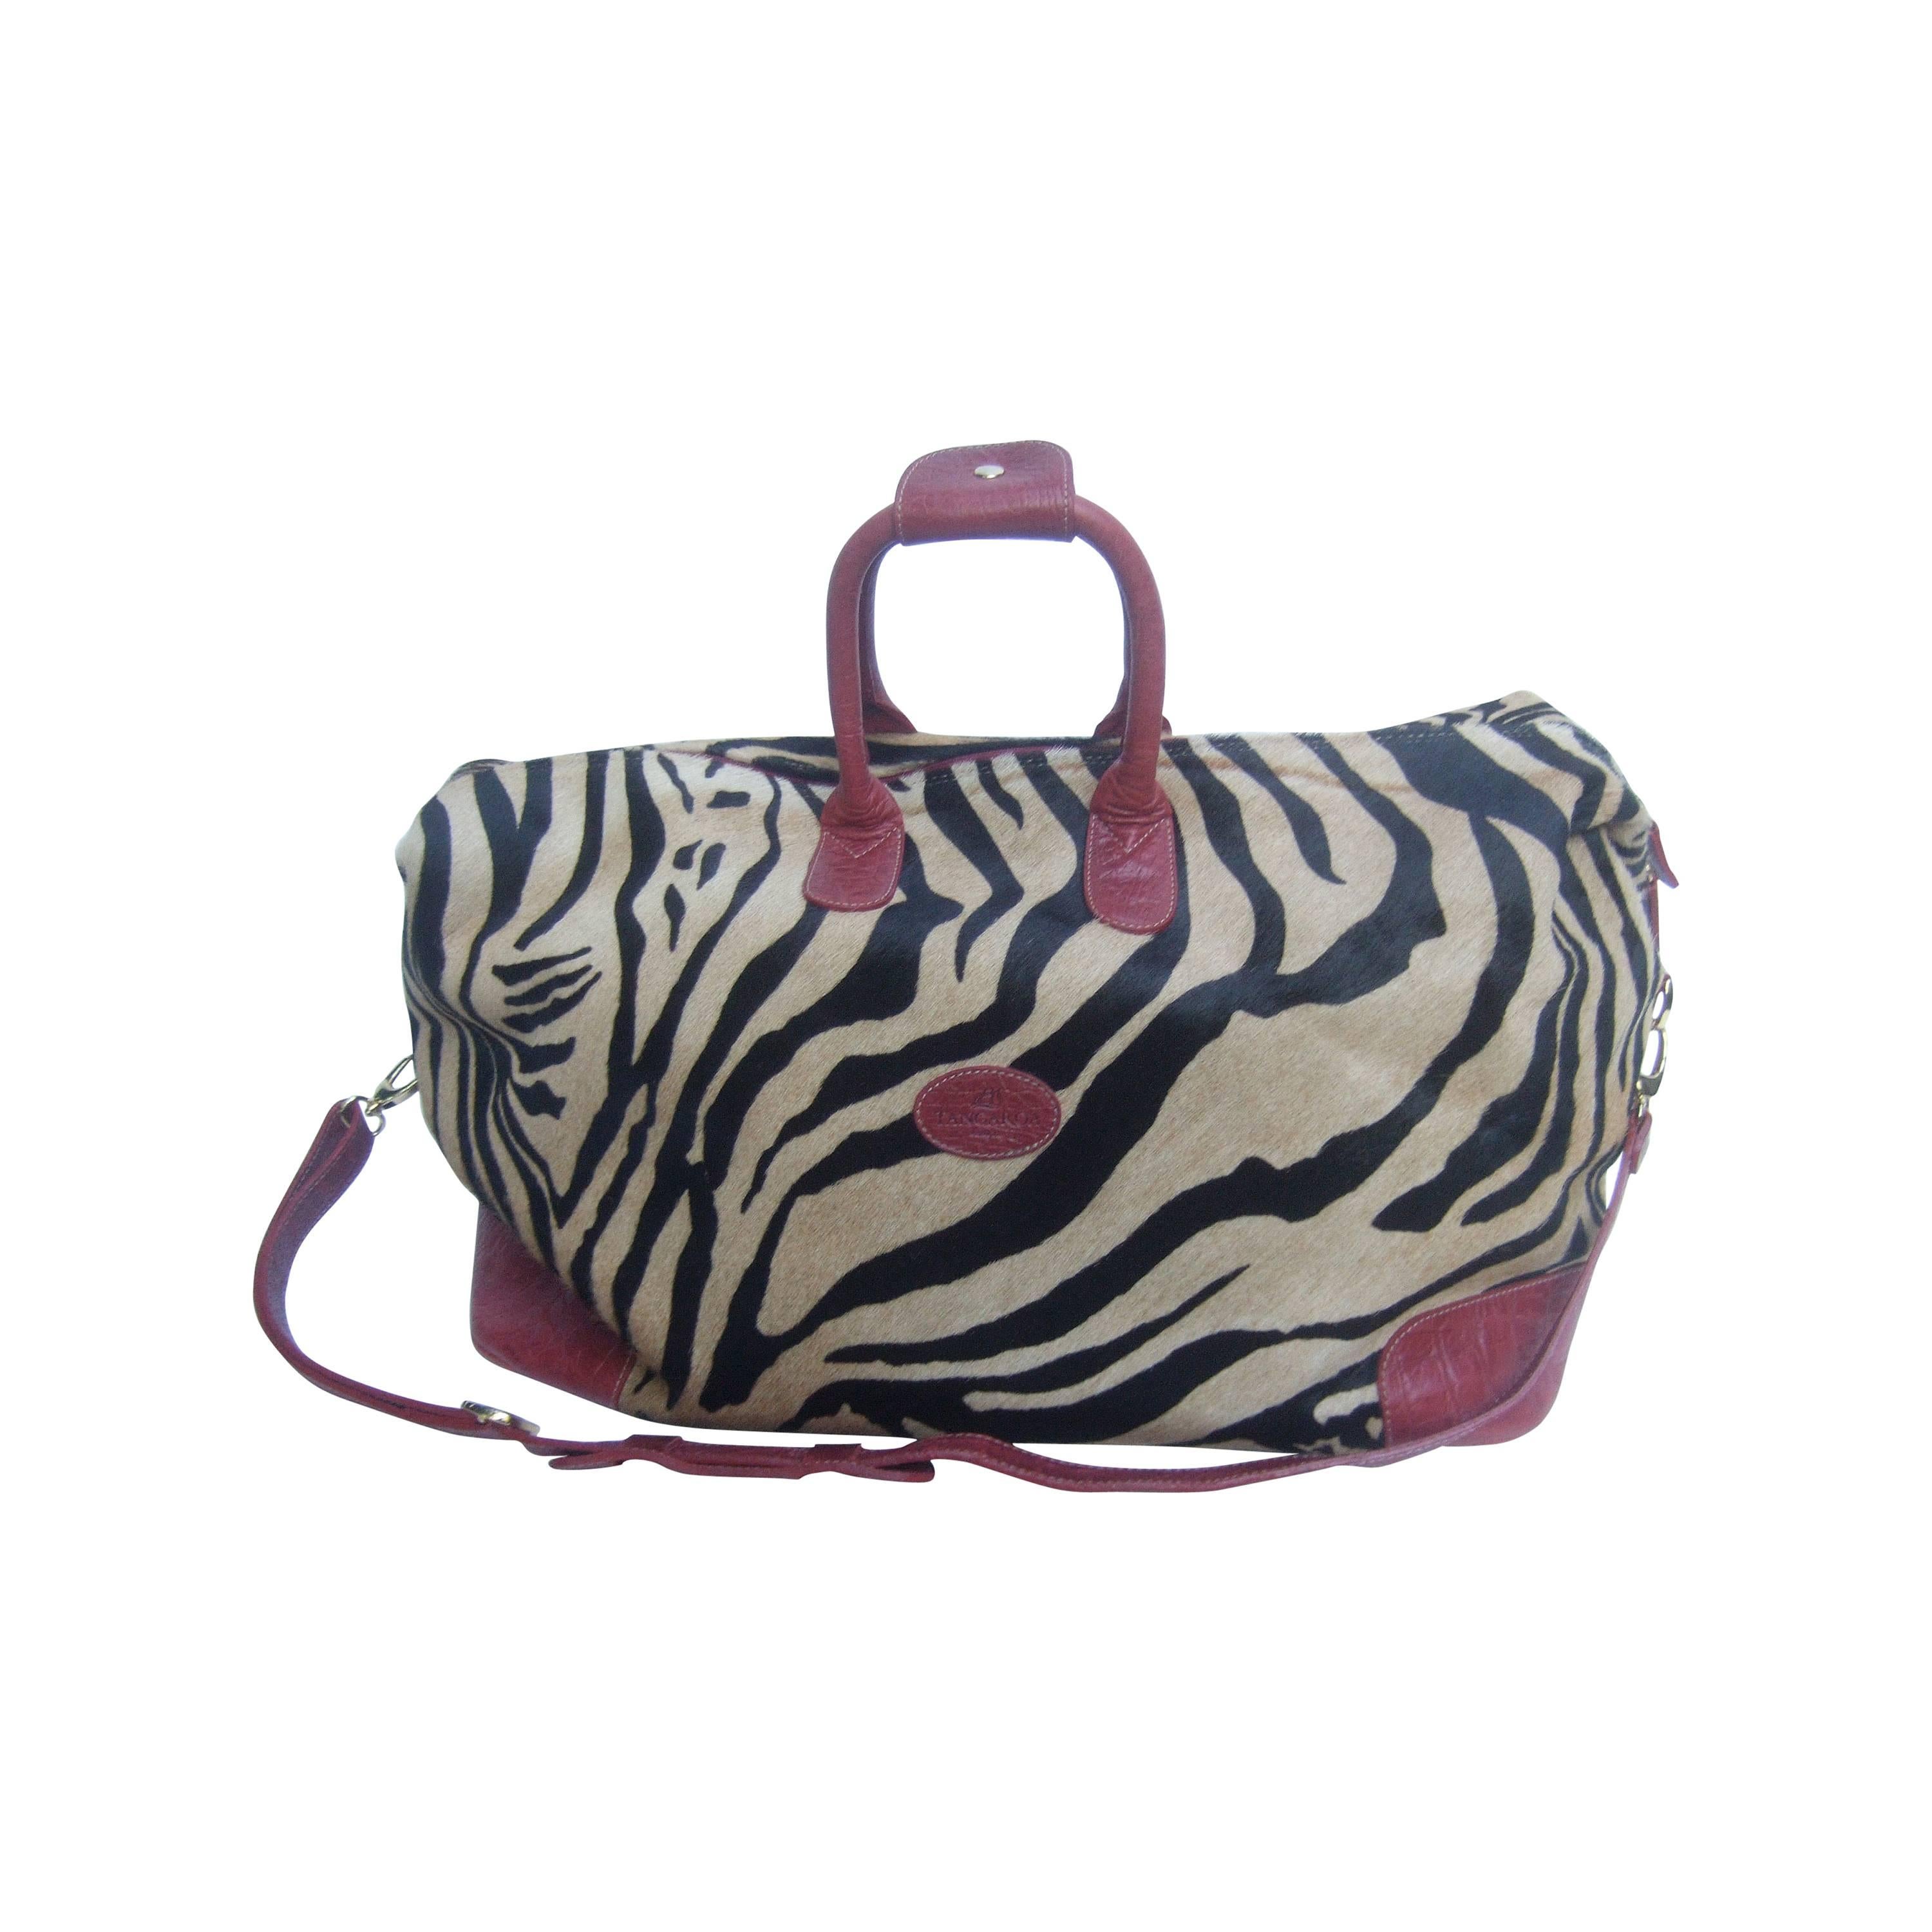 Exotic Zebra Pony Hair Travel Bag by Tangarora Made in Italy